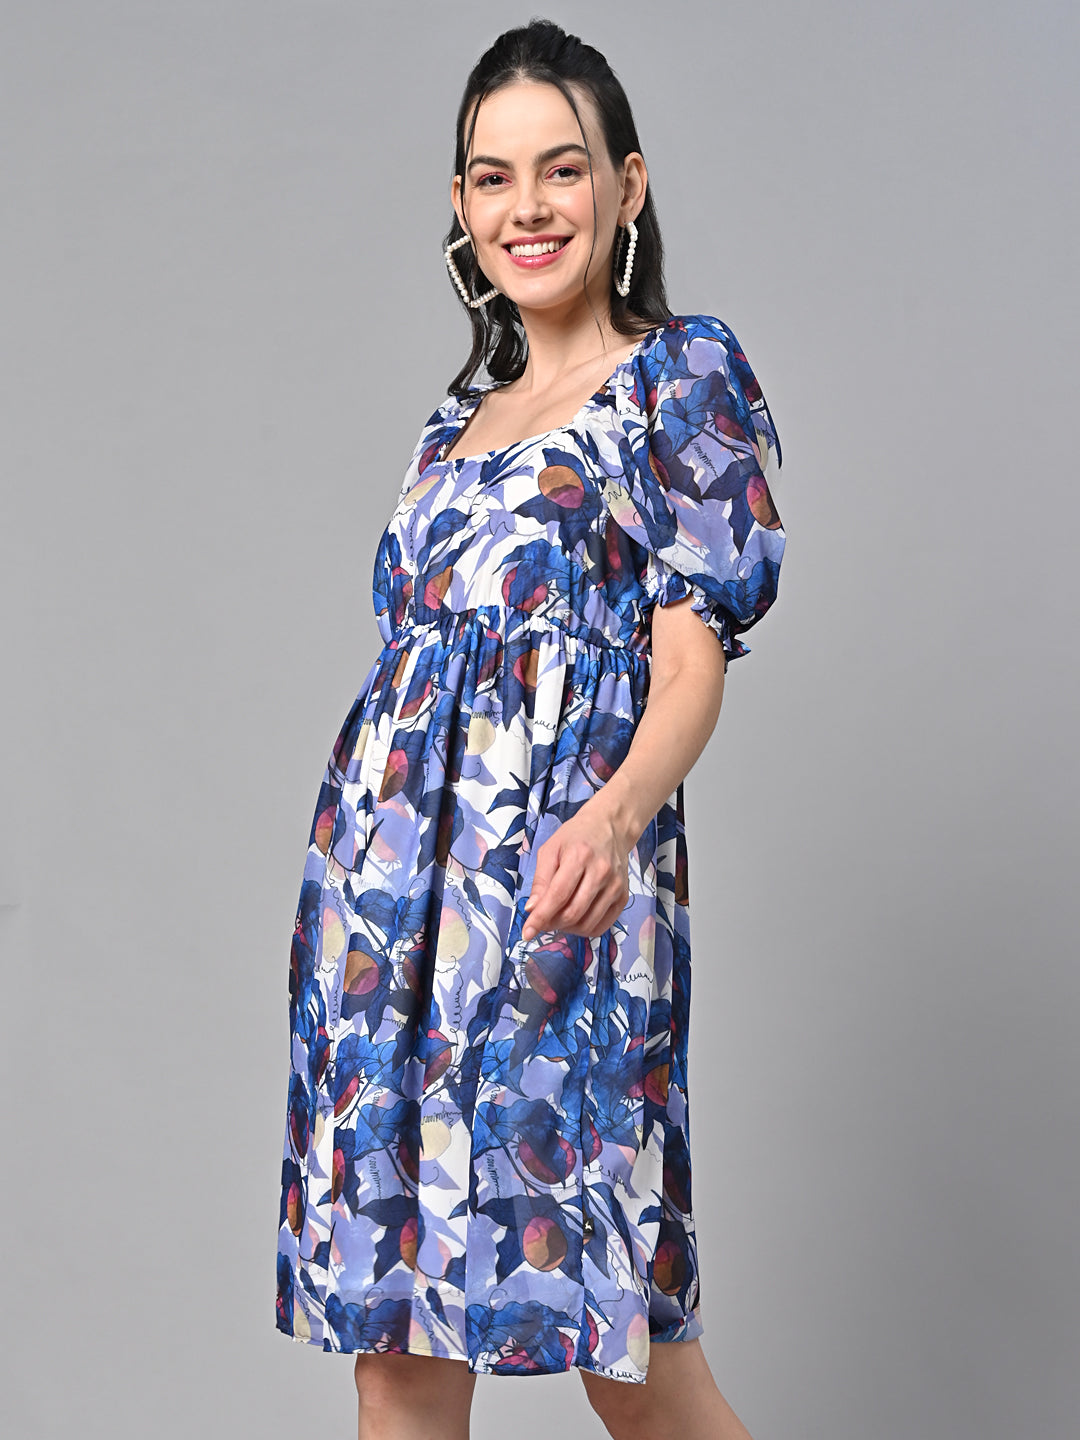 Valbone Women’s Solid Blue Colour Georgette Print Dress